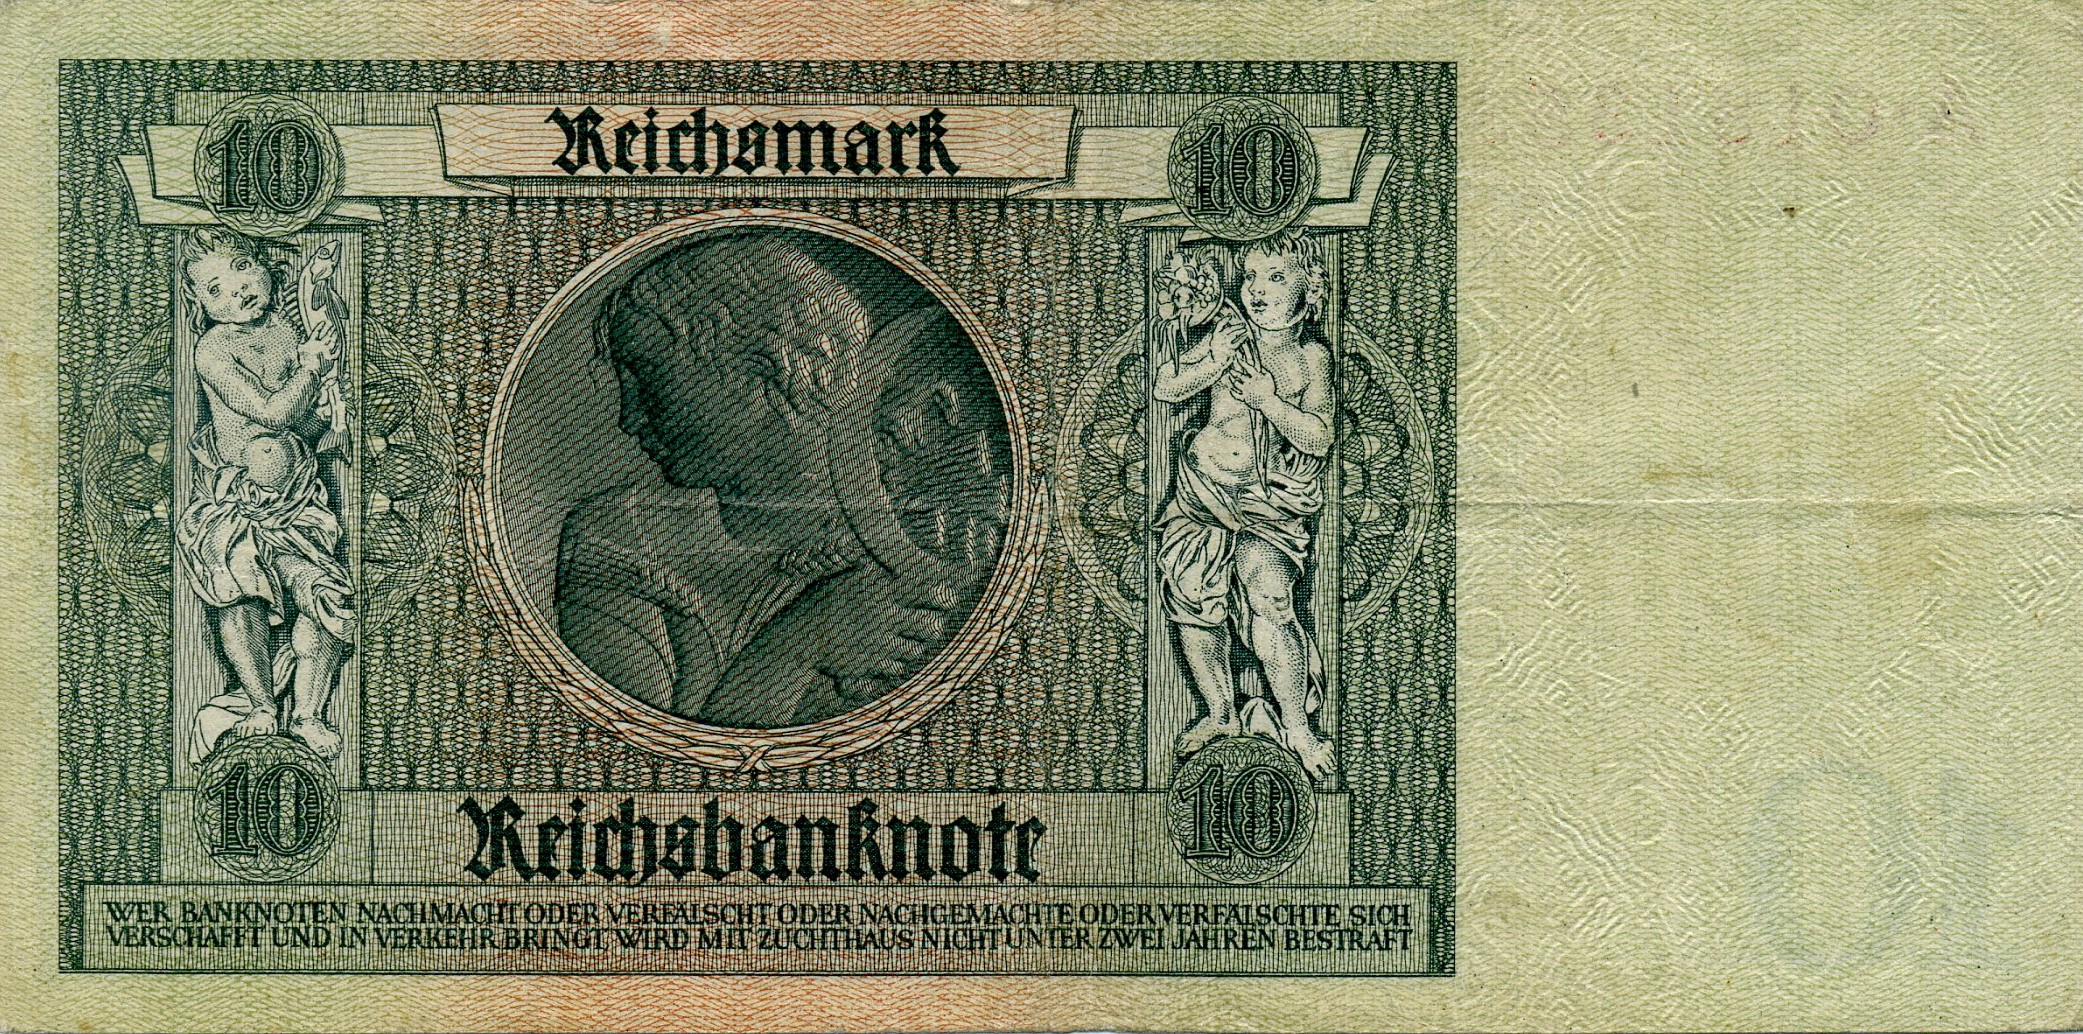 10 марок 1929 года. Реверс. Реферат Рефератович.